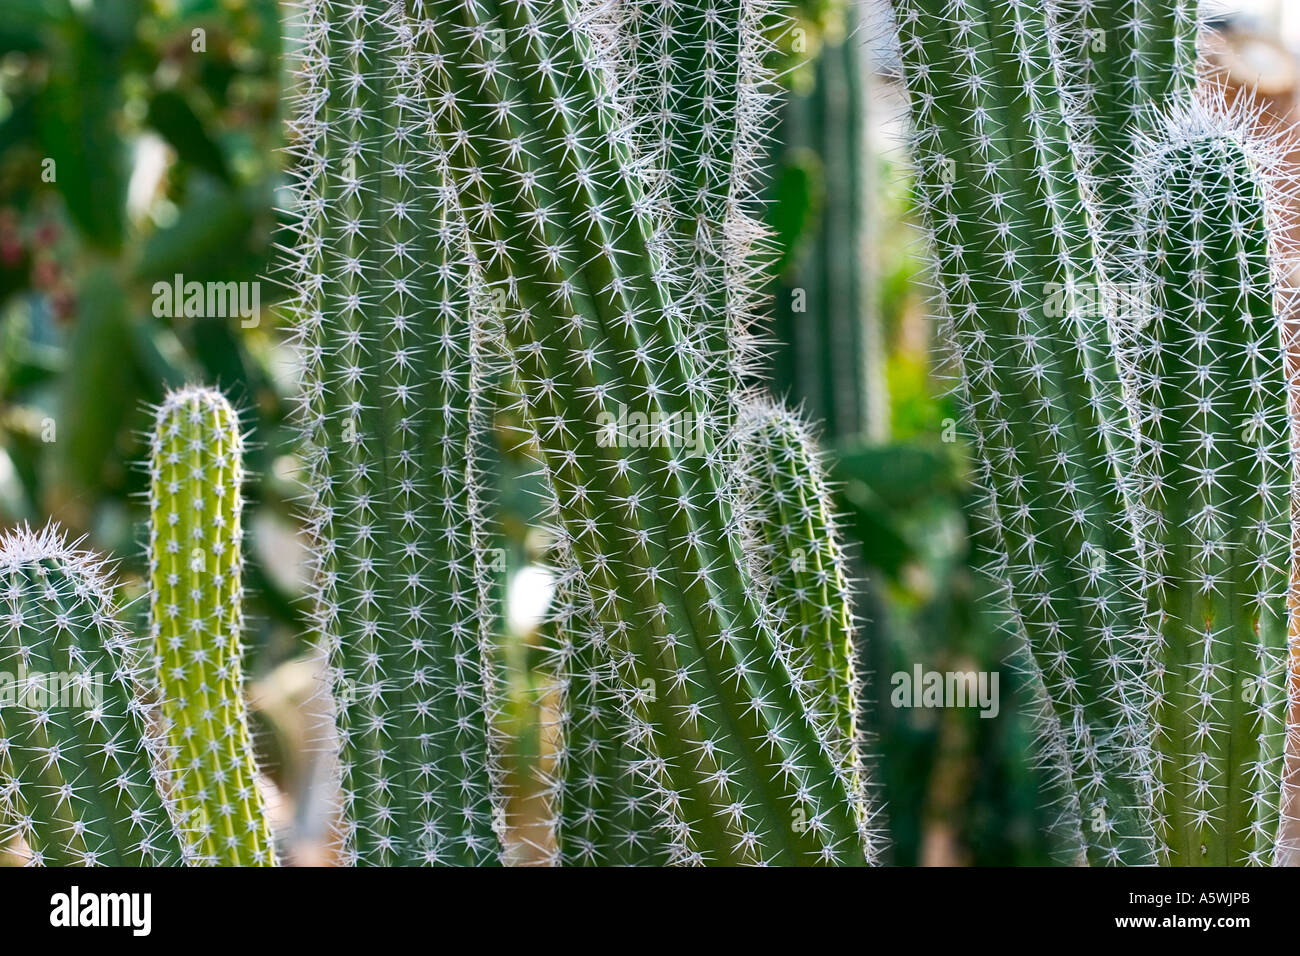 Cactus shot in natural environment Stock Photo